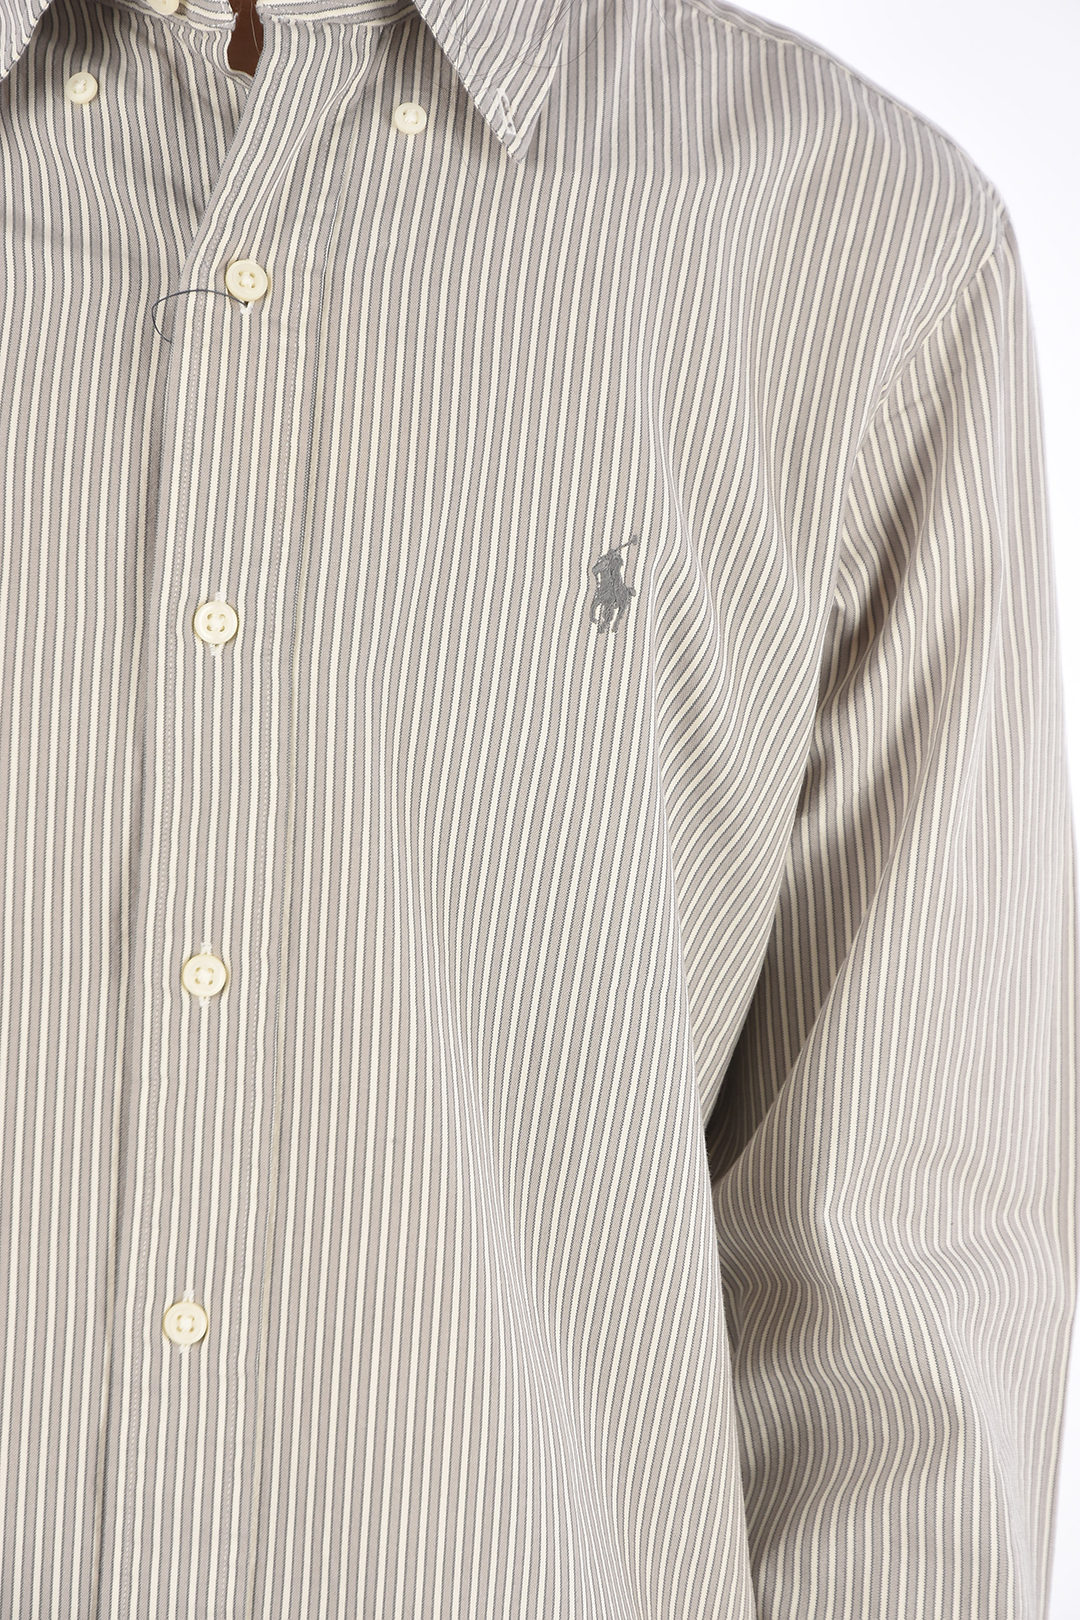 Polo Ralph Lauren Striped Shirt men - Glamood Outlet